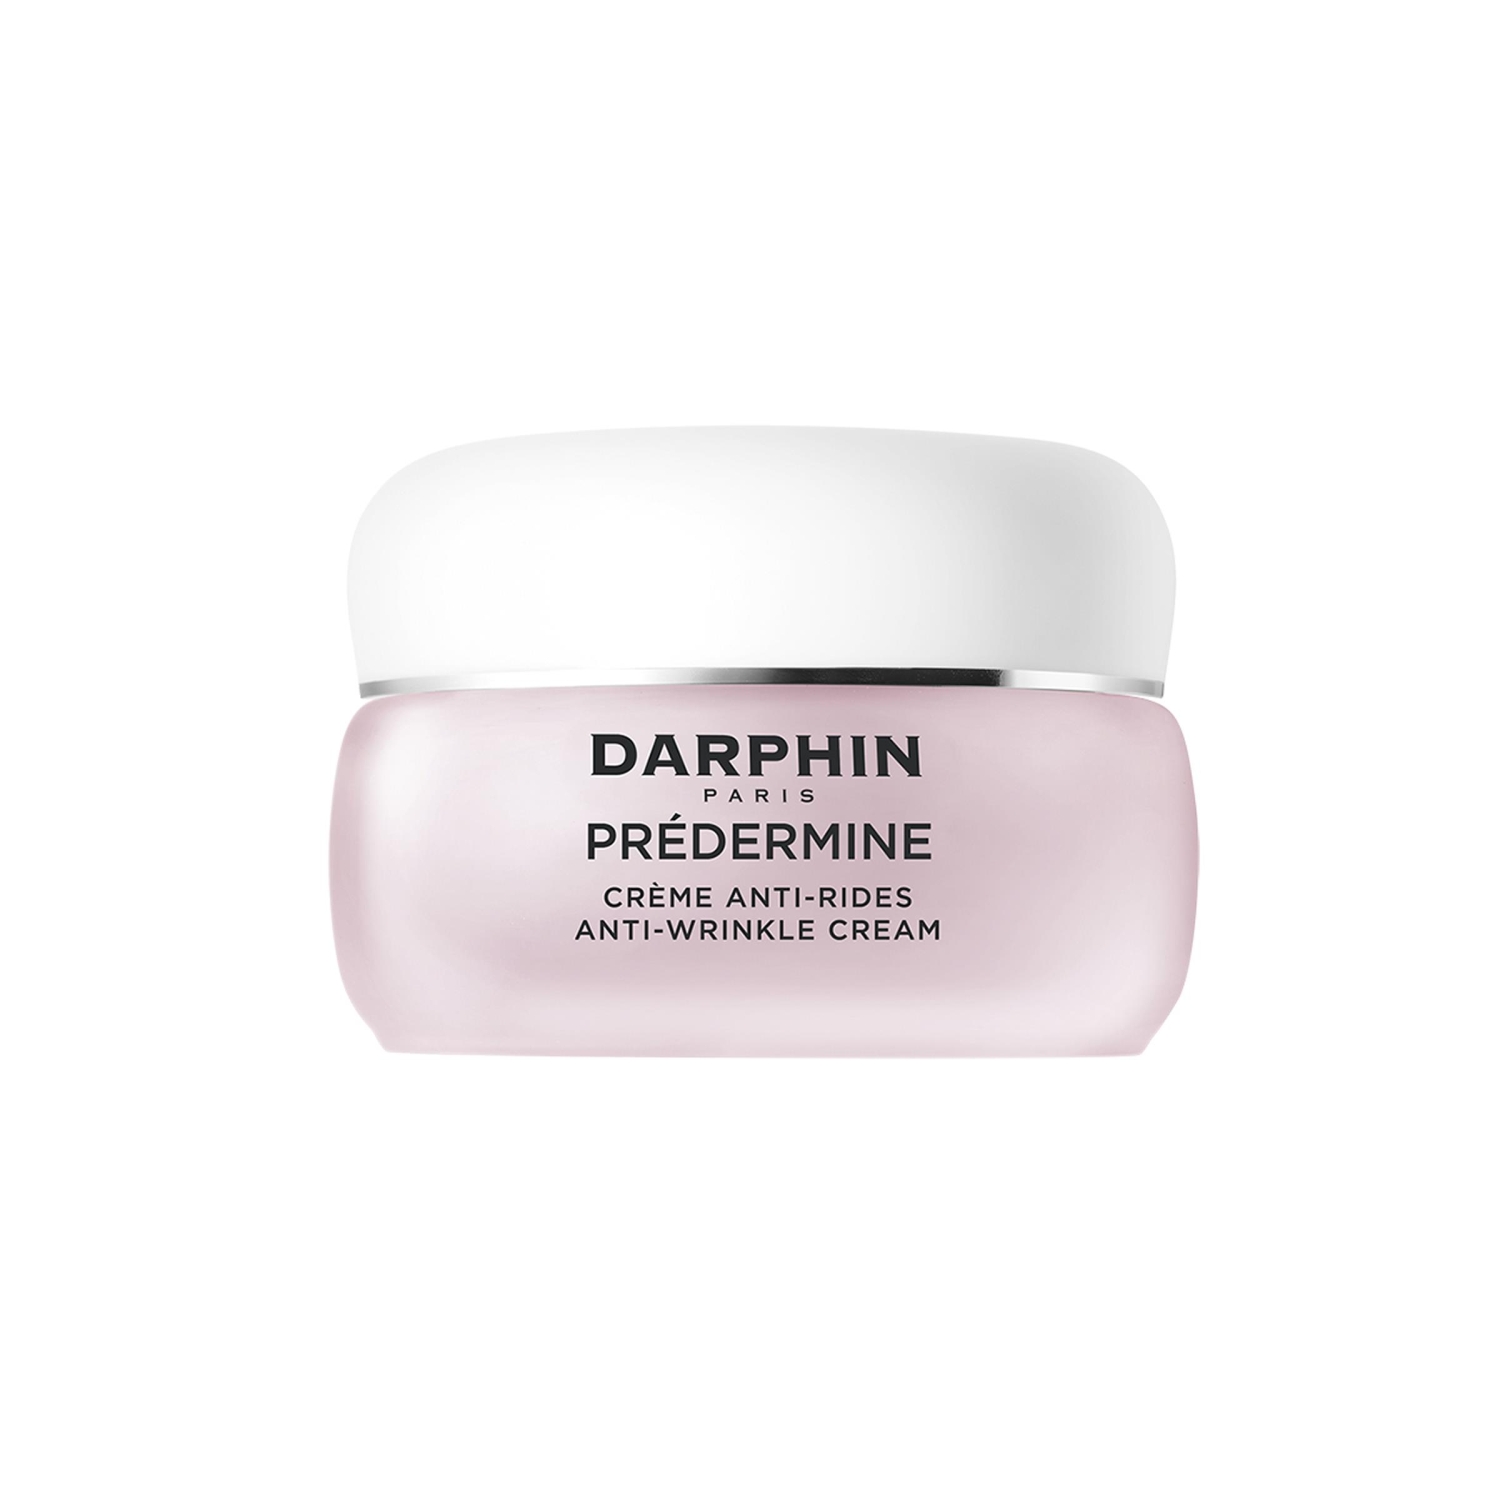 Darphin Predermine Cream Anti-Wrinkle & Firming Normal Skin 50ml - 1